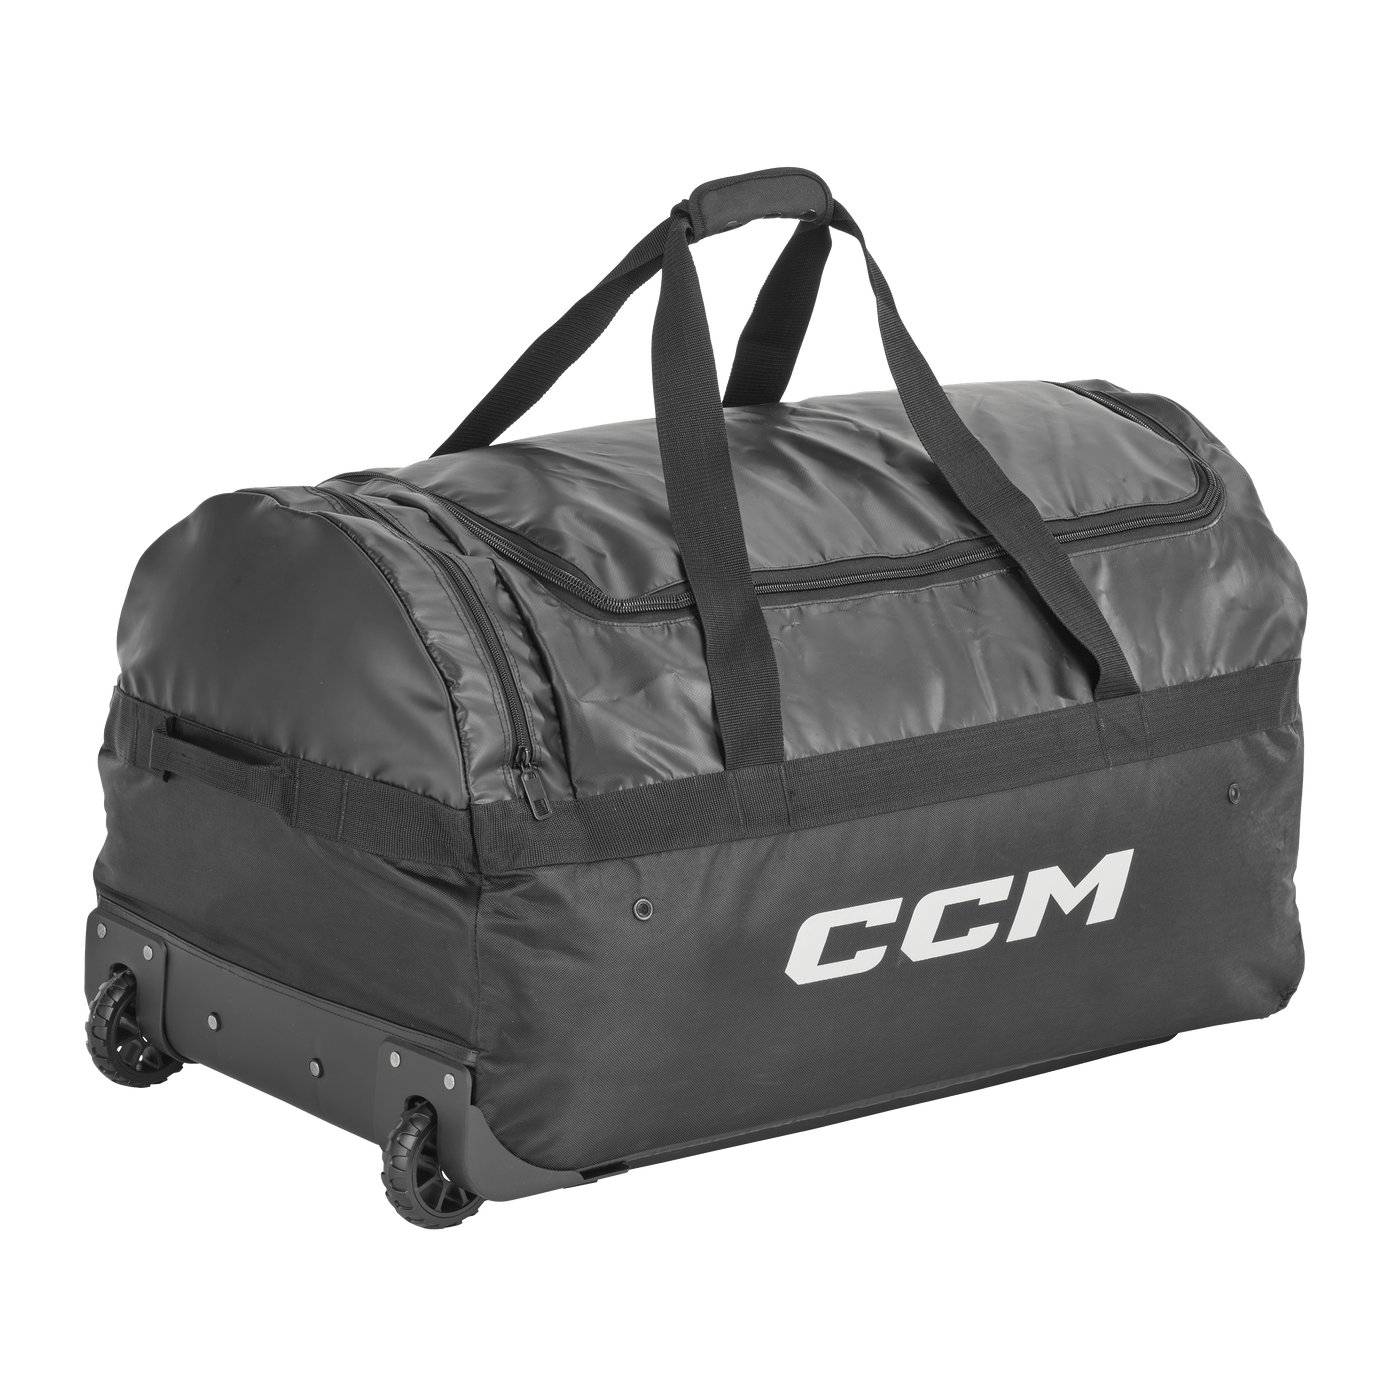 CCM 480 Elite Junior Wheel Hockey Bag - The Hockey Shop Source For Sports